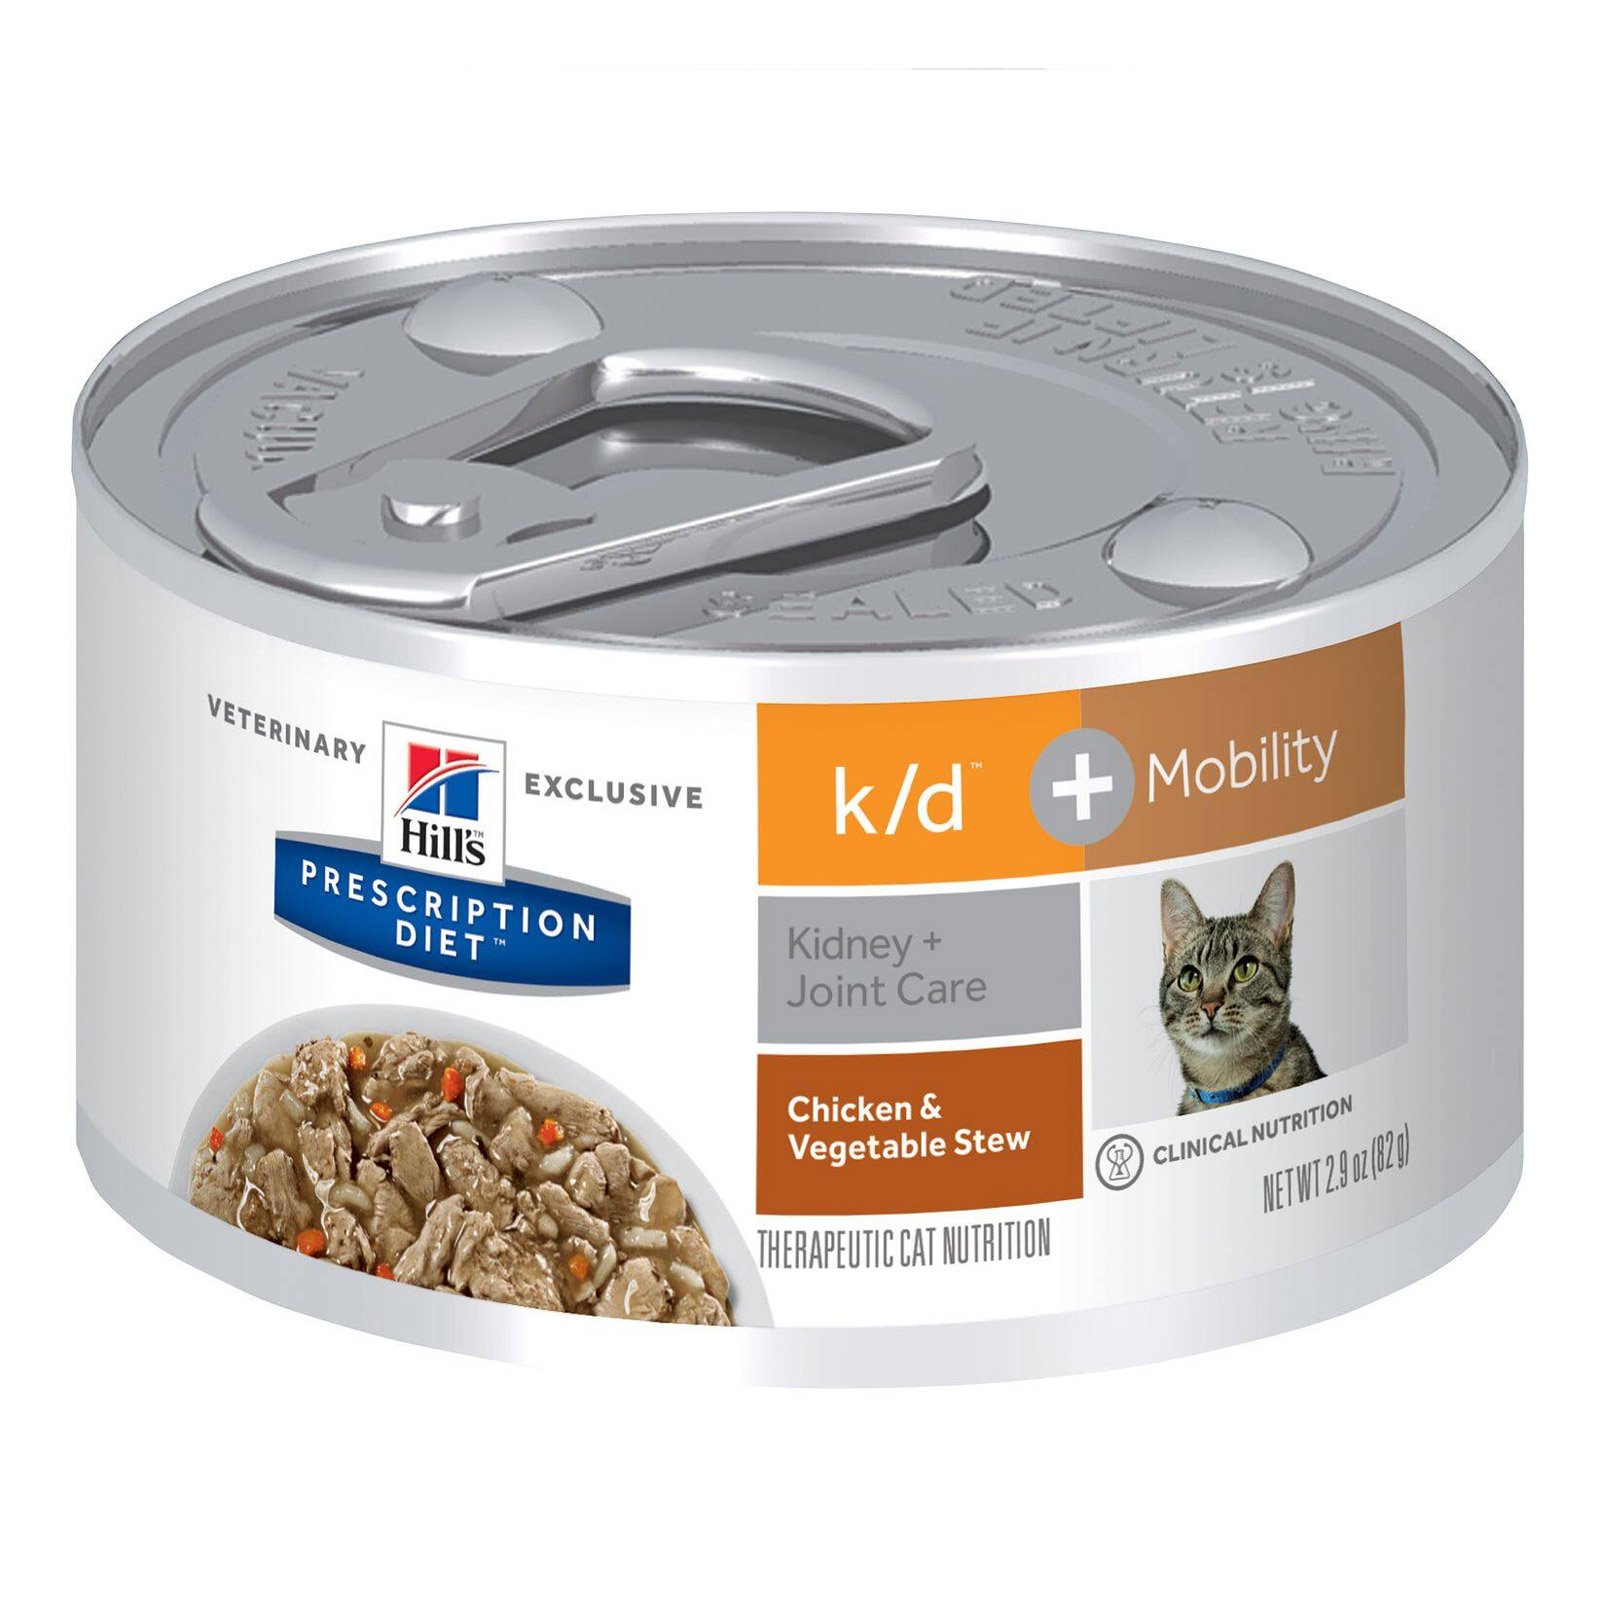 Hill's Prescription Diet k/d + Mobility Chicken & Vegetable Stew Cat Food 82 Gm * 24